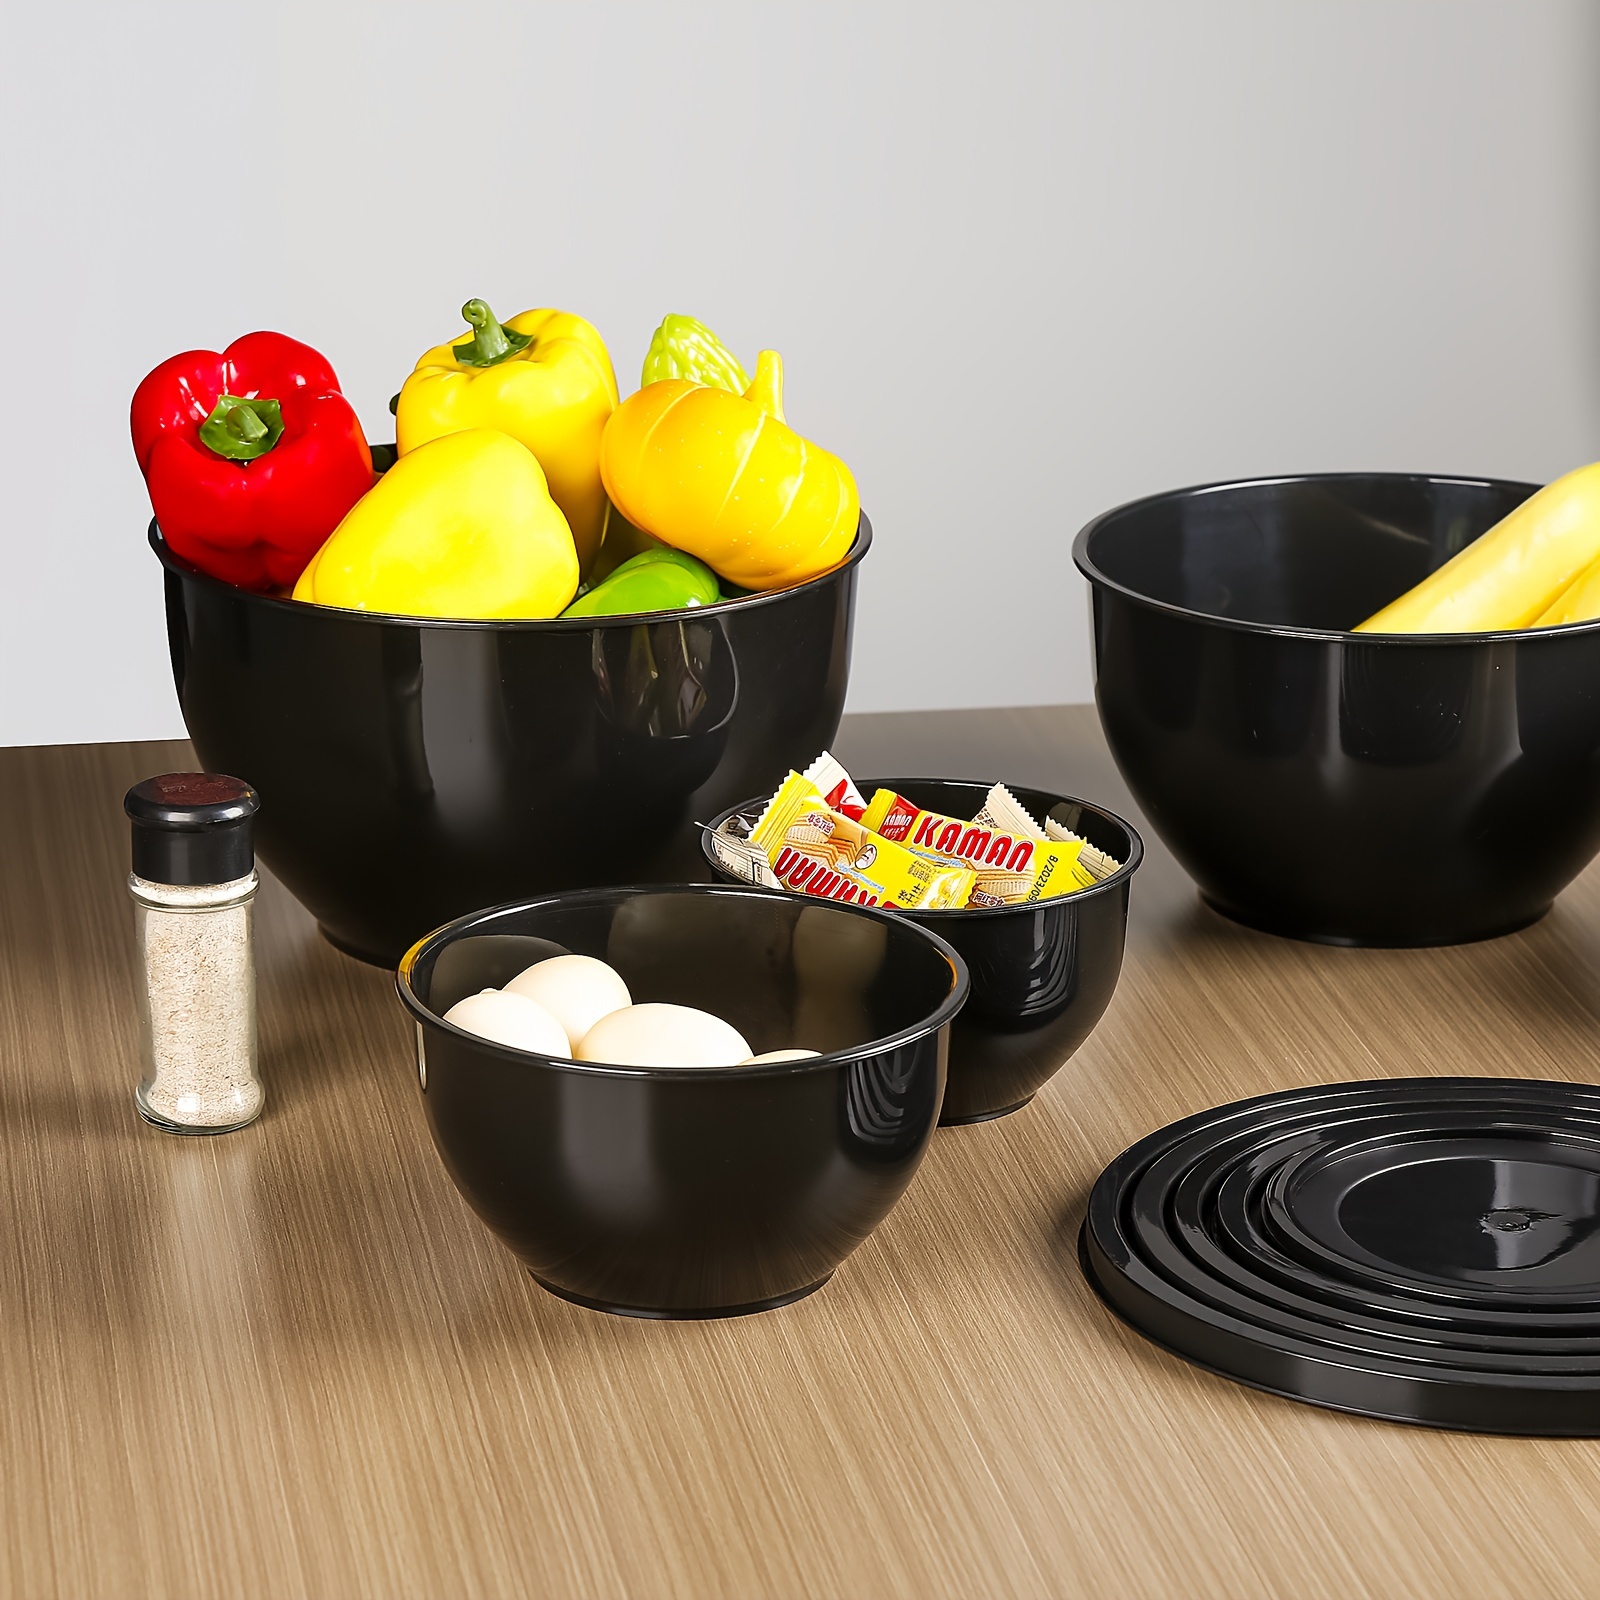 Salad Mixing Bowls With Lids, Plastic Mixing Bowls Set, Stackable